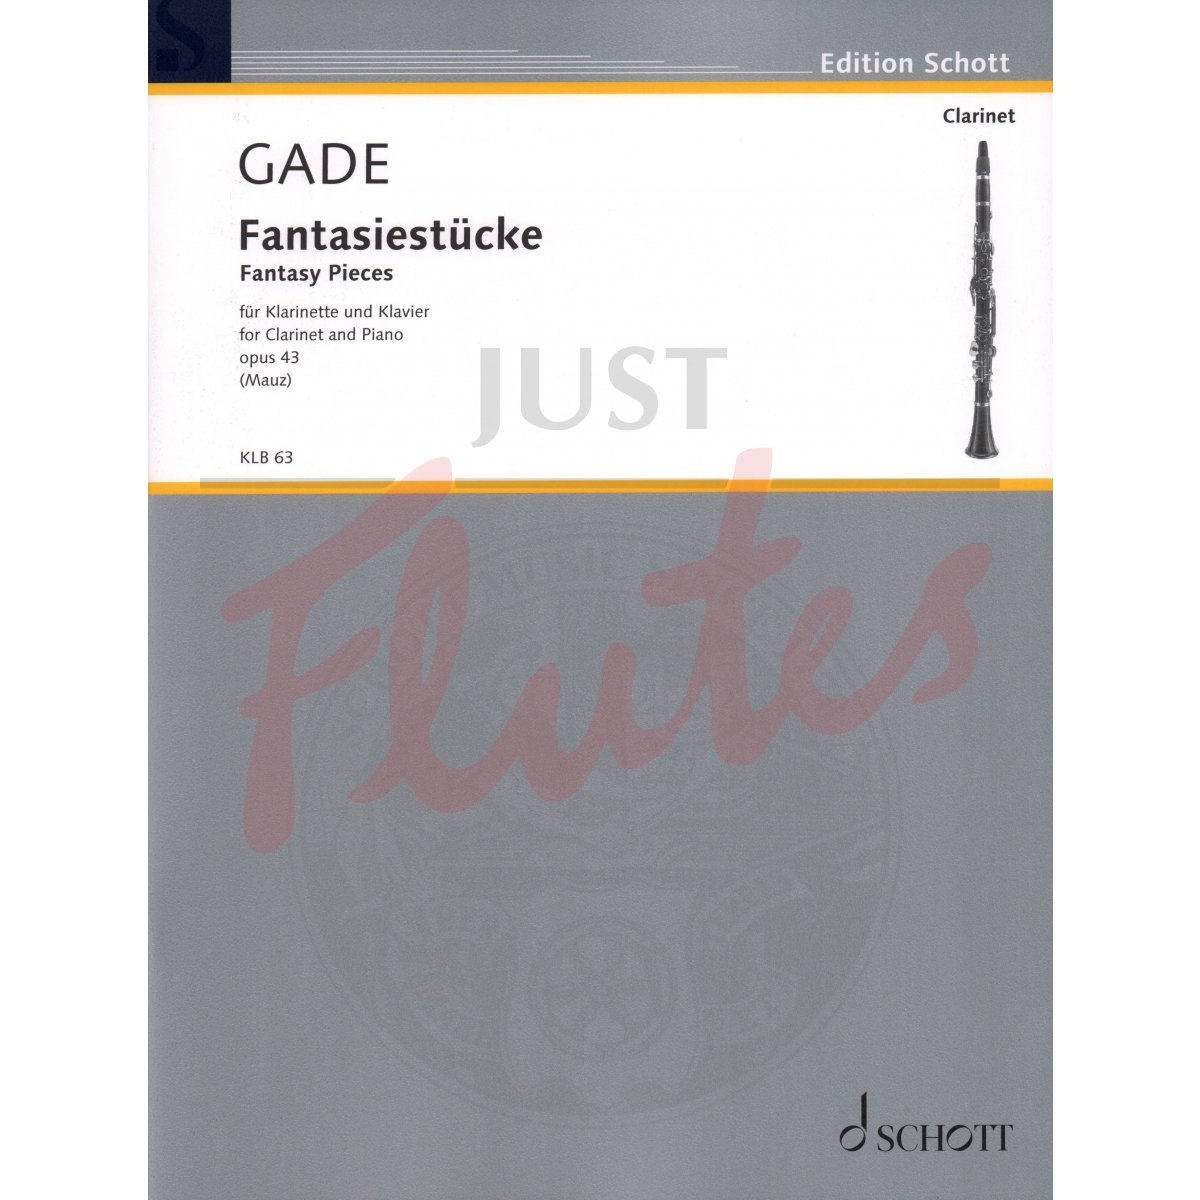 Fantasiestucke (Fantasy Pieces) for Clarinet and Piano